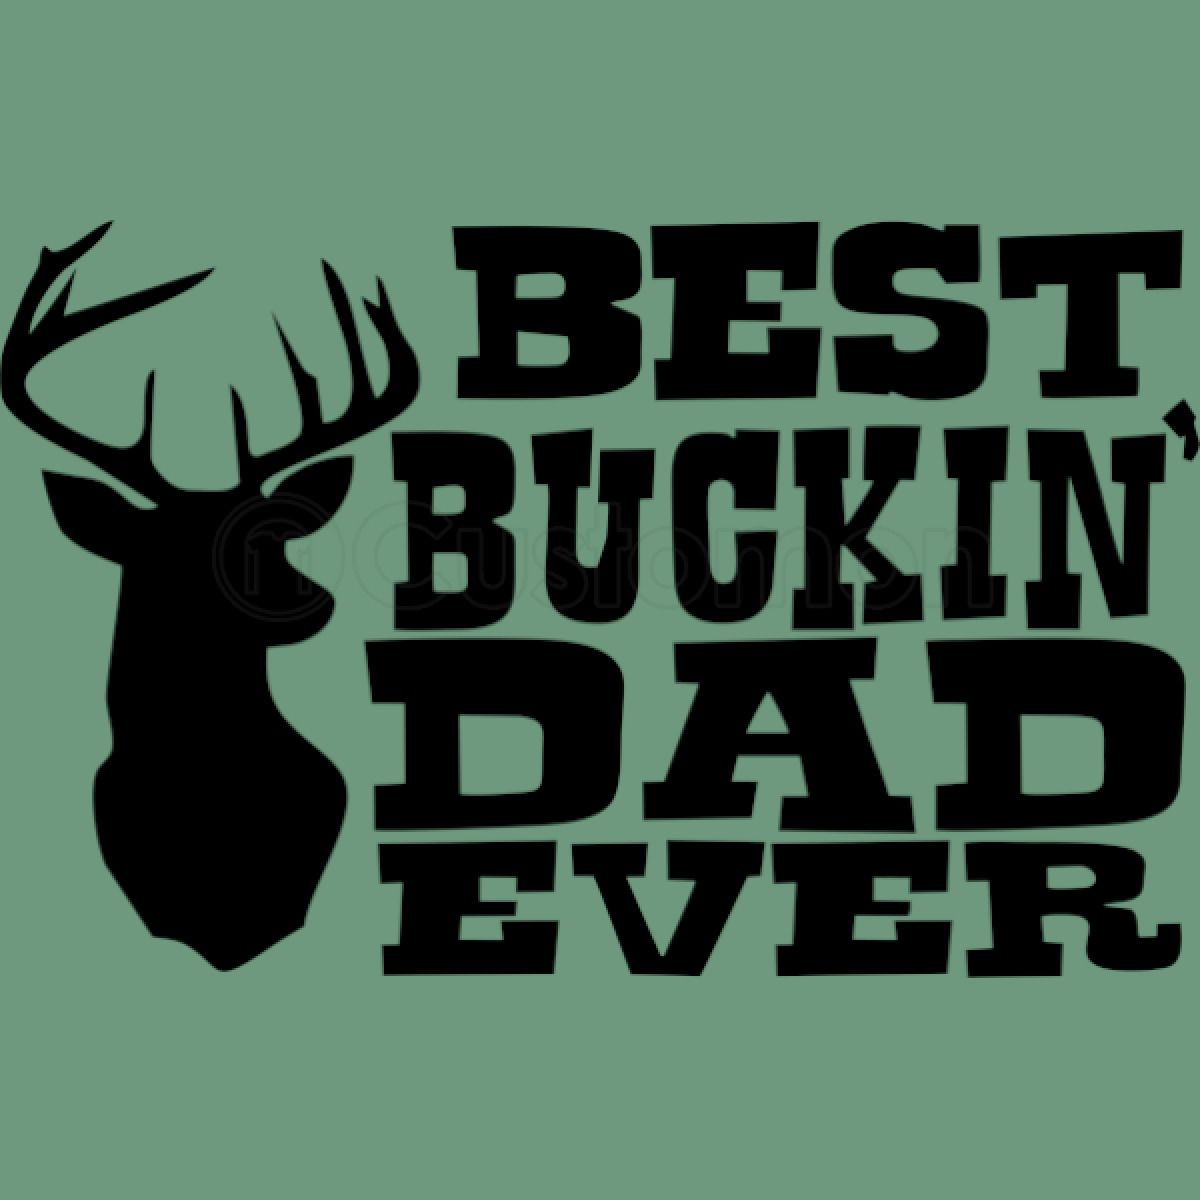 Download Best Buckin Dad Ever Apron - Customon